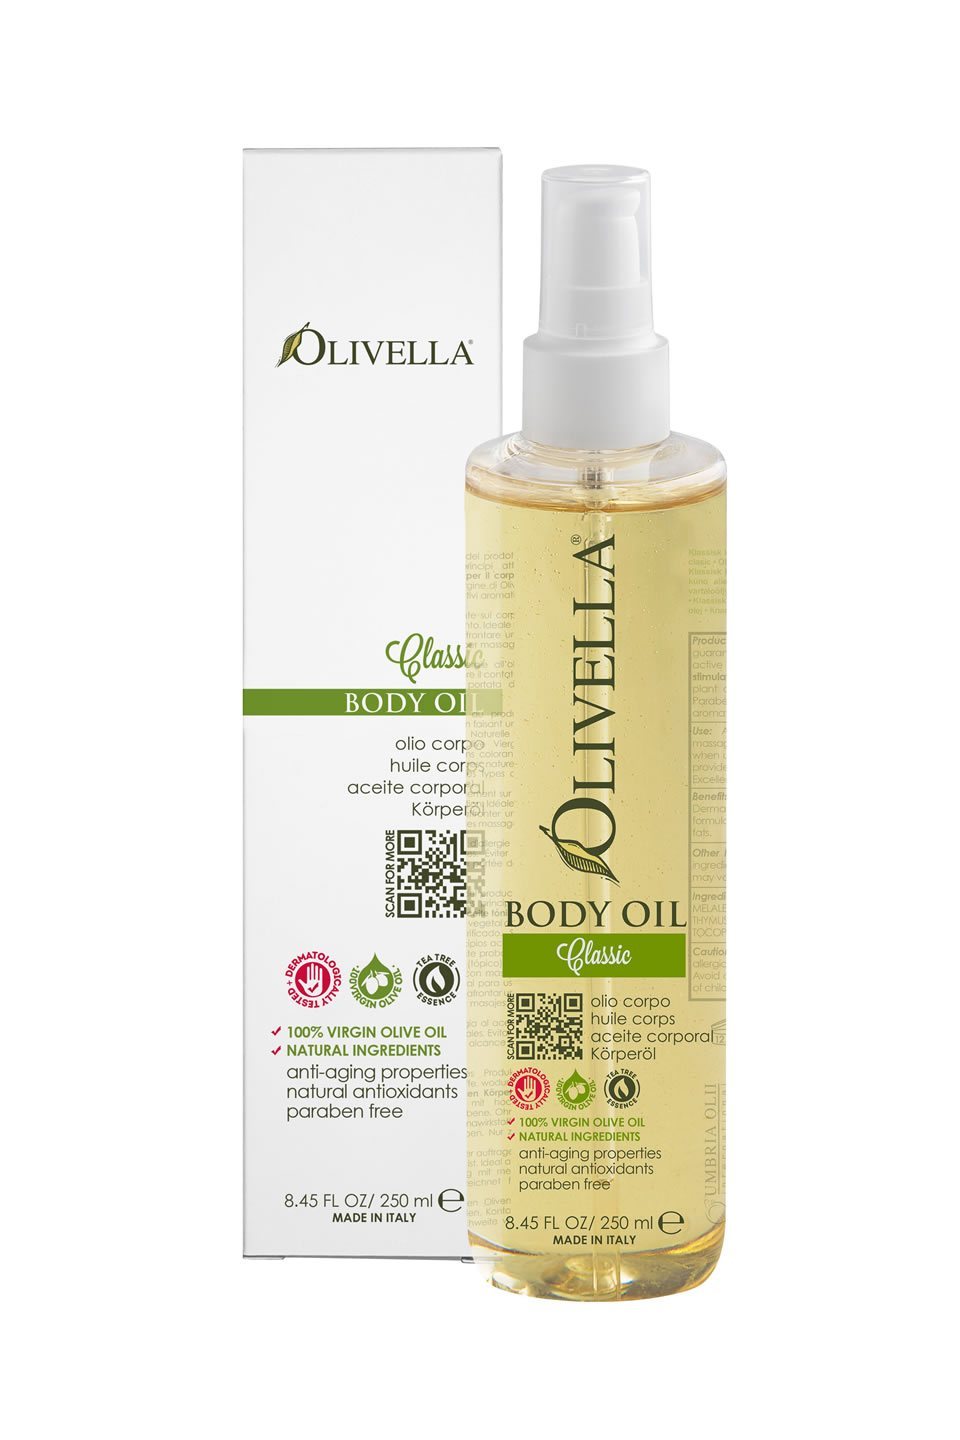 Olivella Body Oil - Classic - Olivella Official Store